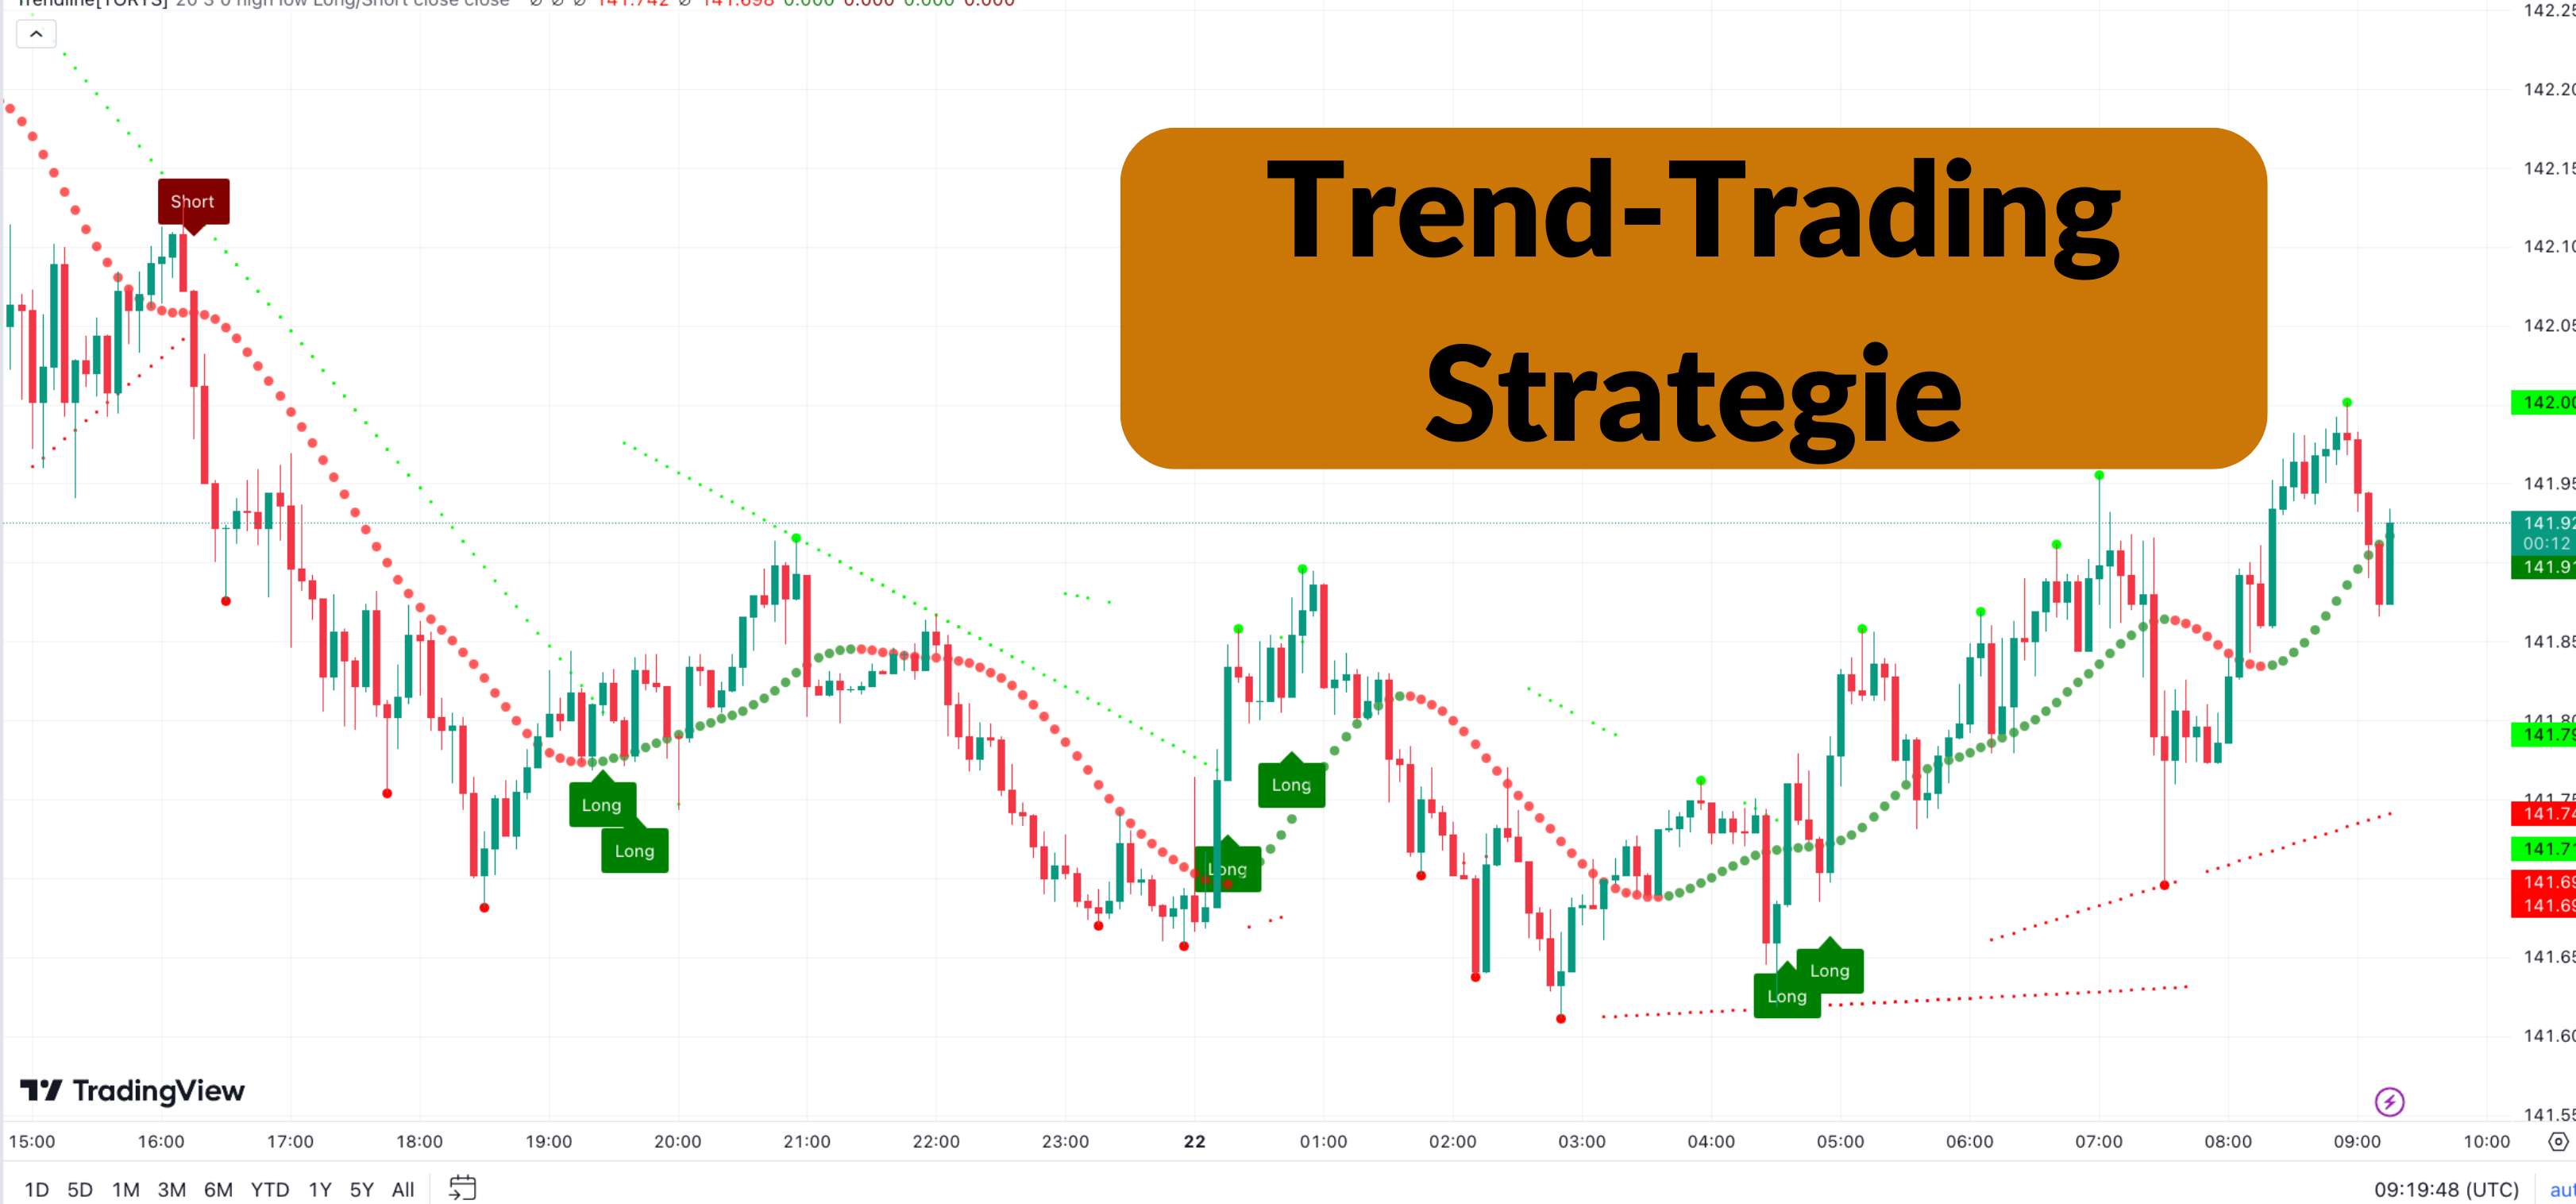 Trend-Trading
Strategie